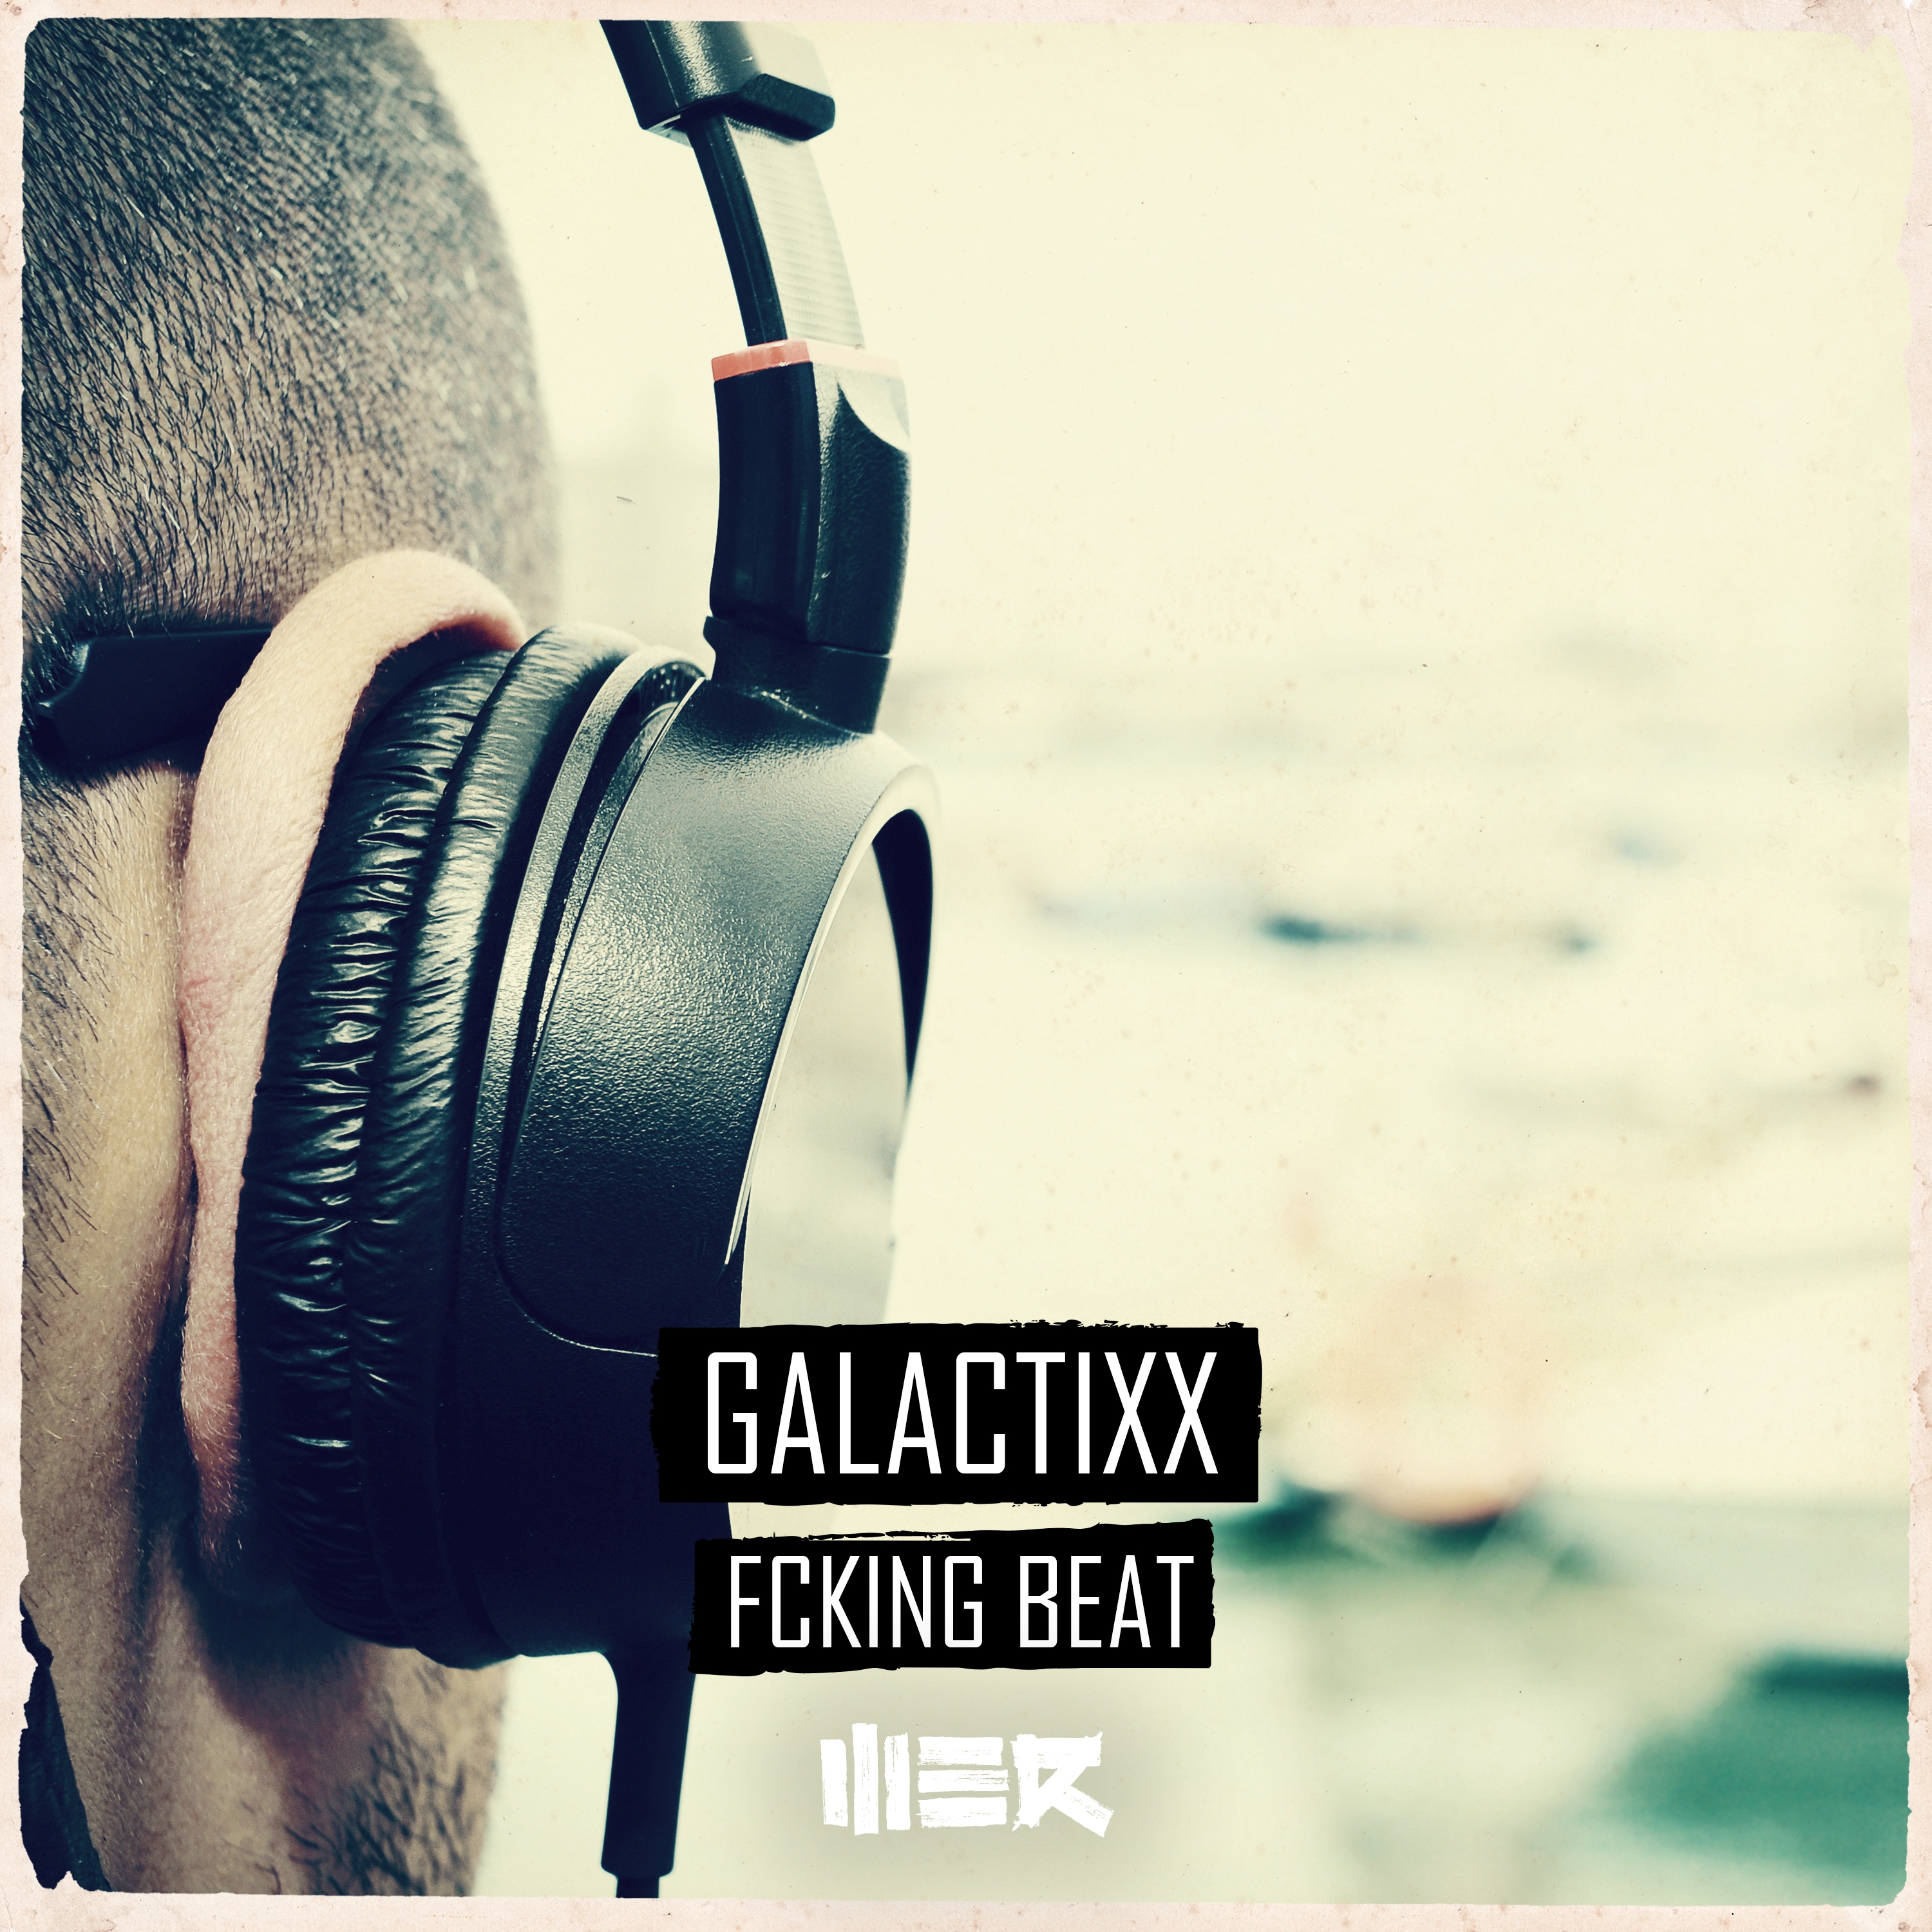 Музыка New Beat. Just r музыка. Album Art зарубежка fcking vet. B Front & Galactixx - you don't know Extended Mix.